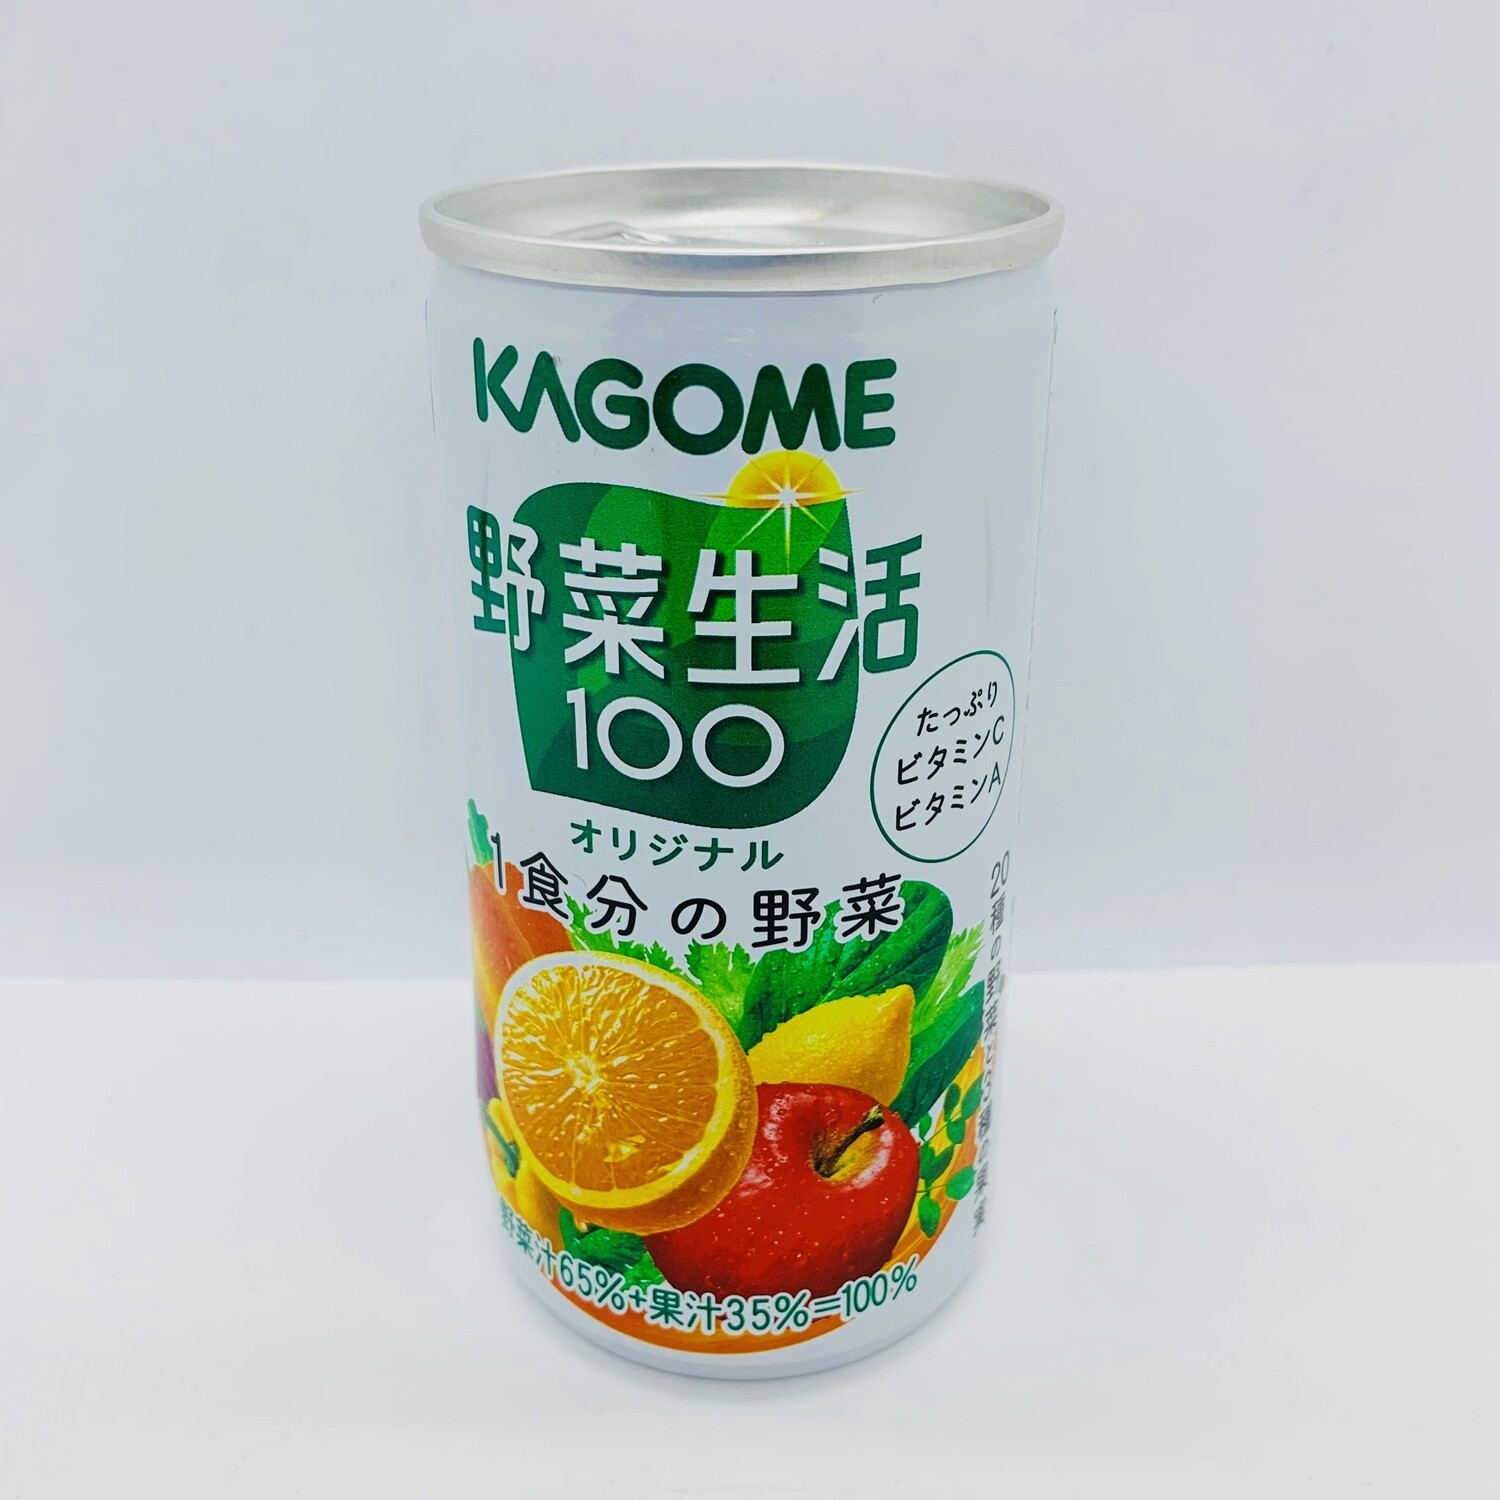 Kagome Yasai Juice